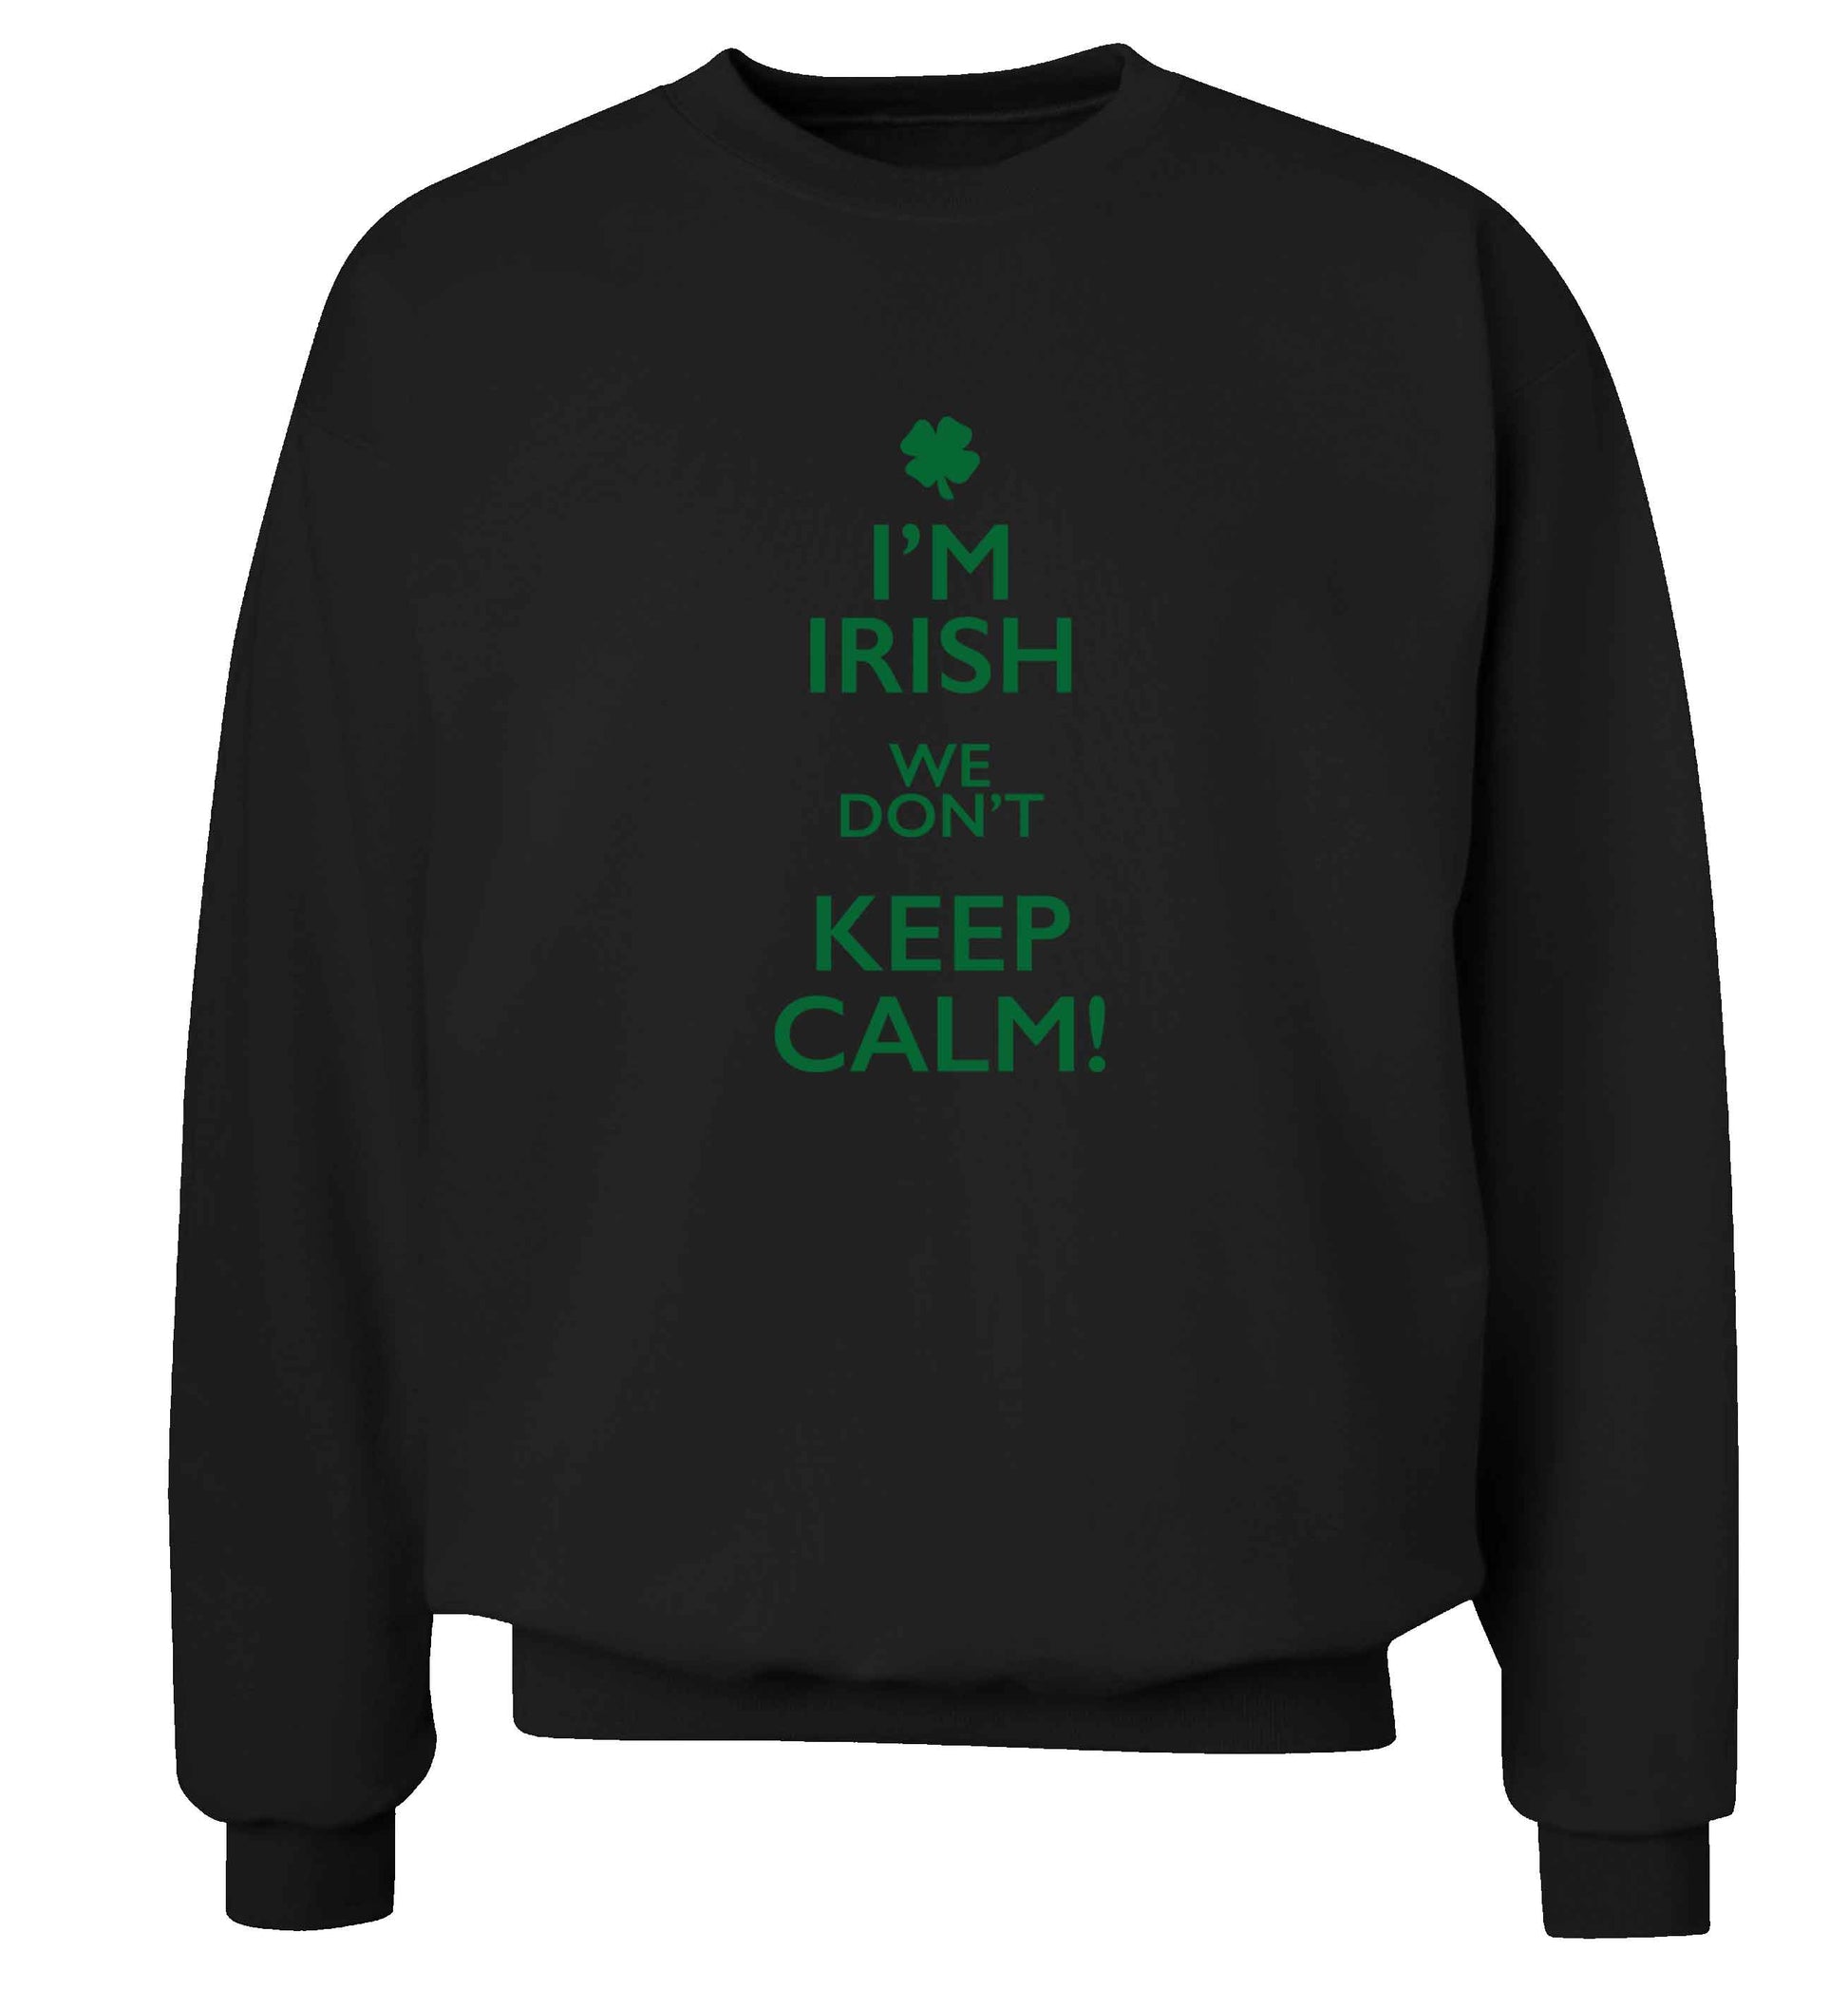 I'm Irish we don't keep calm adult's unisex black sweater 2XL